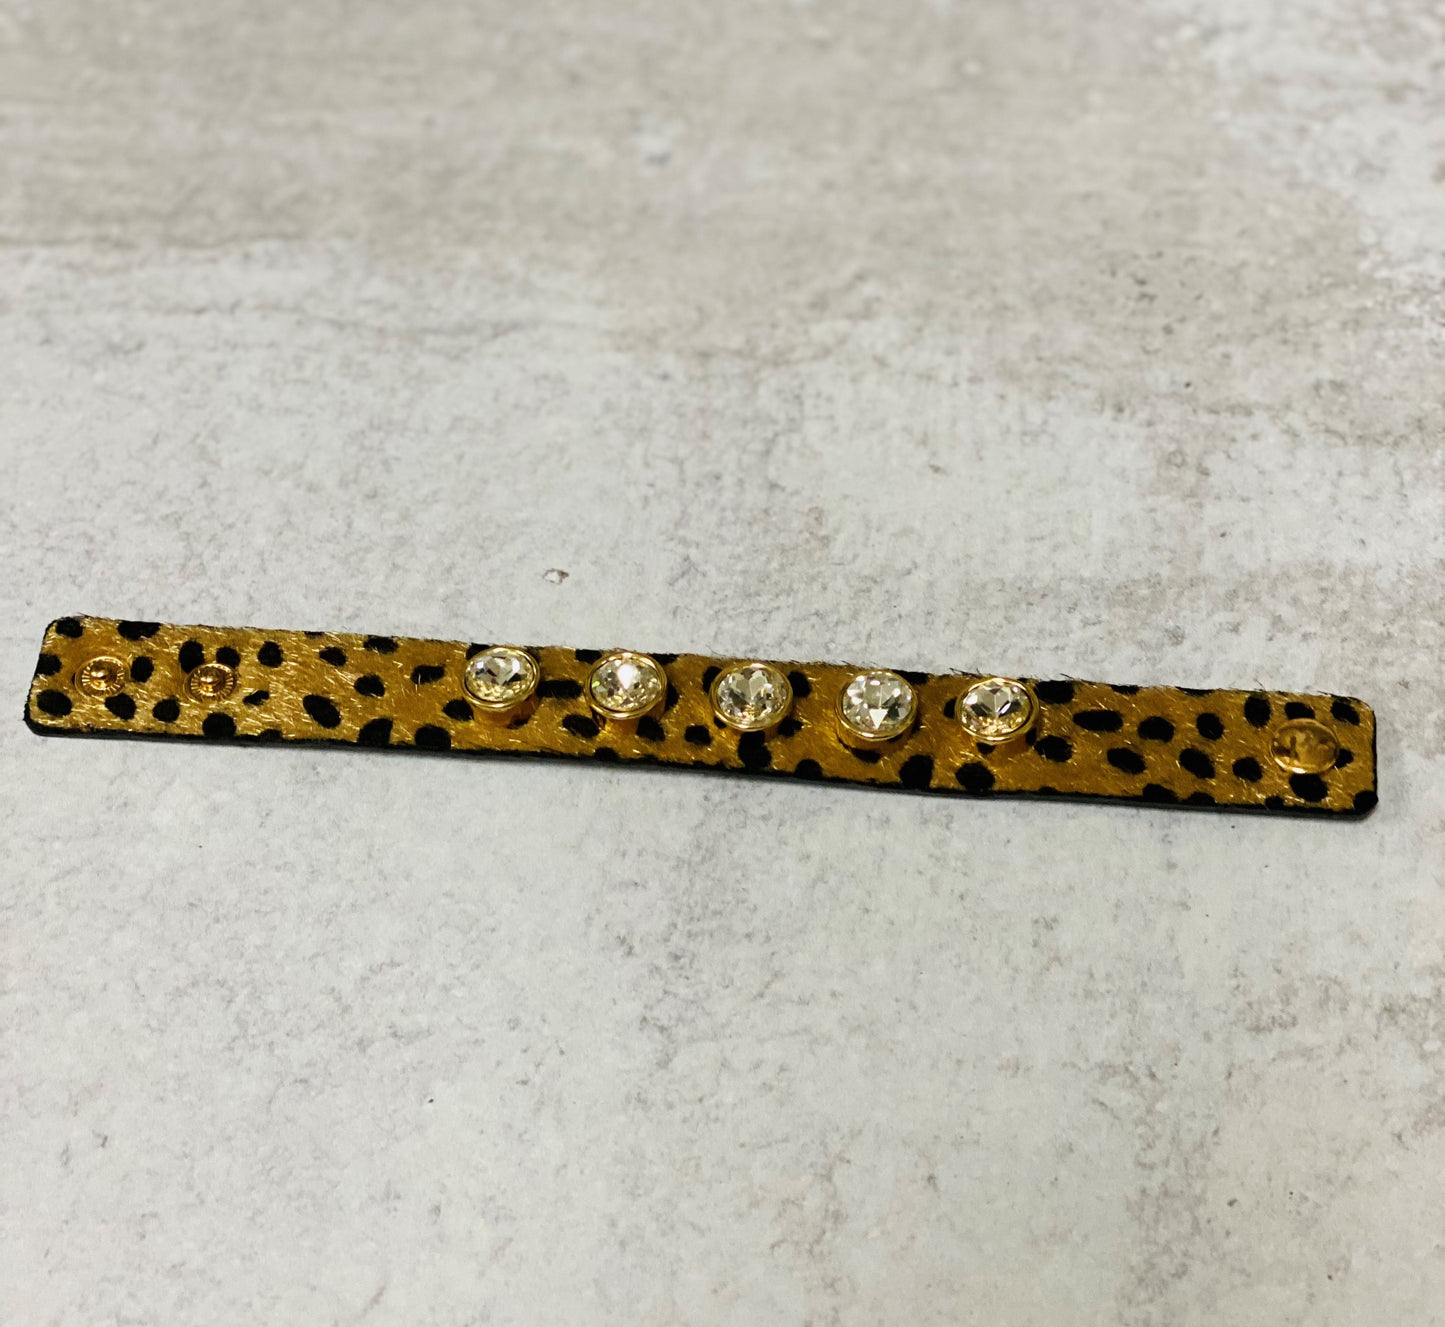 5 Bead & Animal Print Leather Bracelet